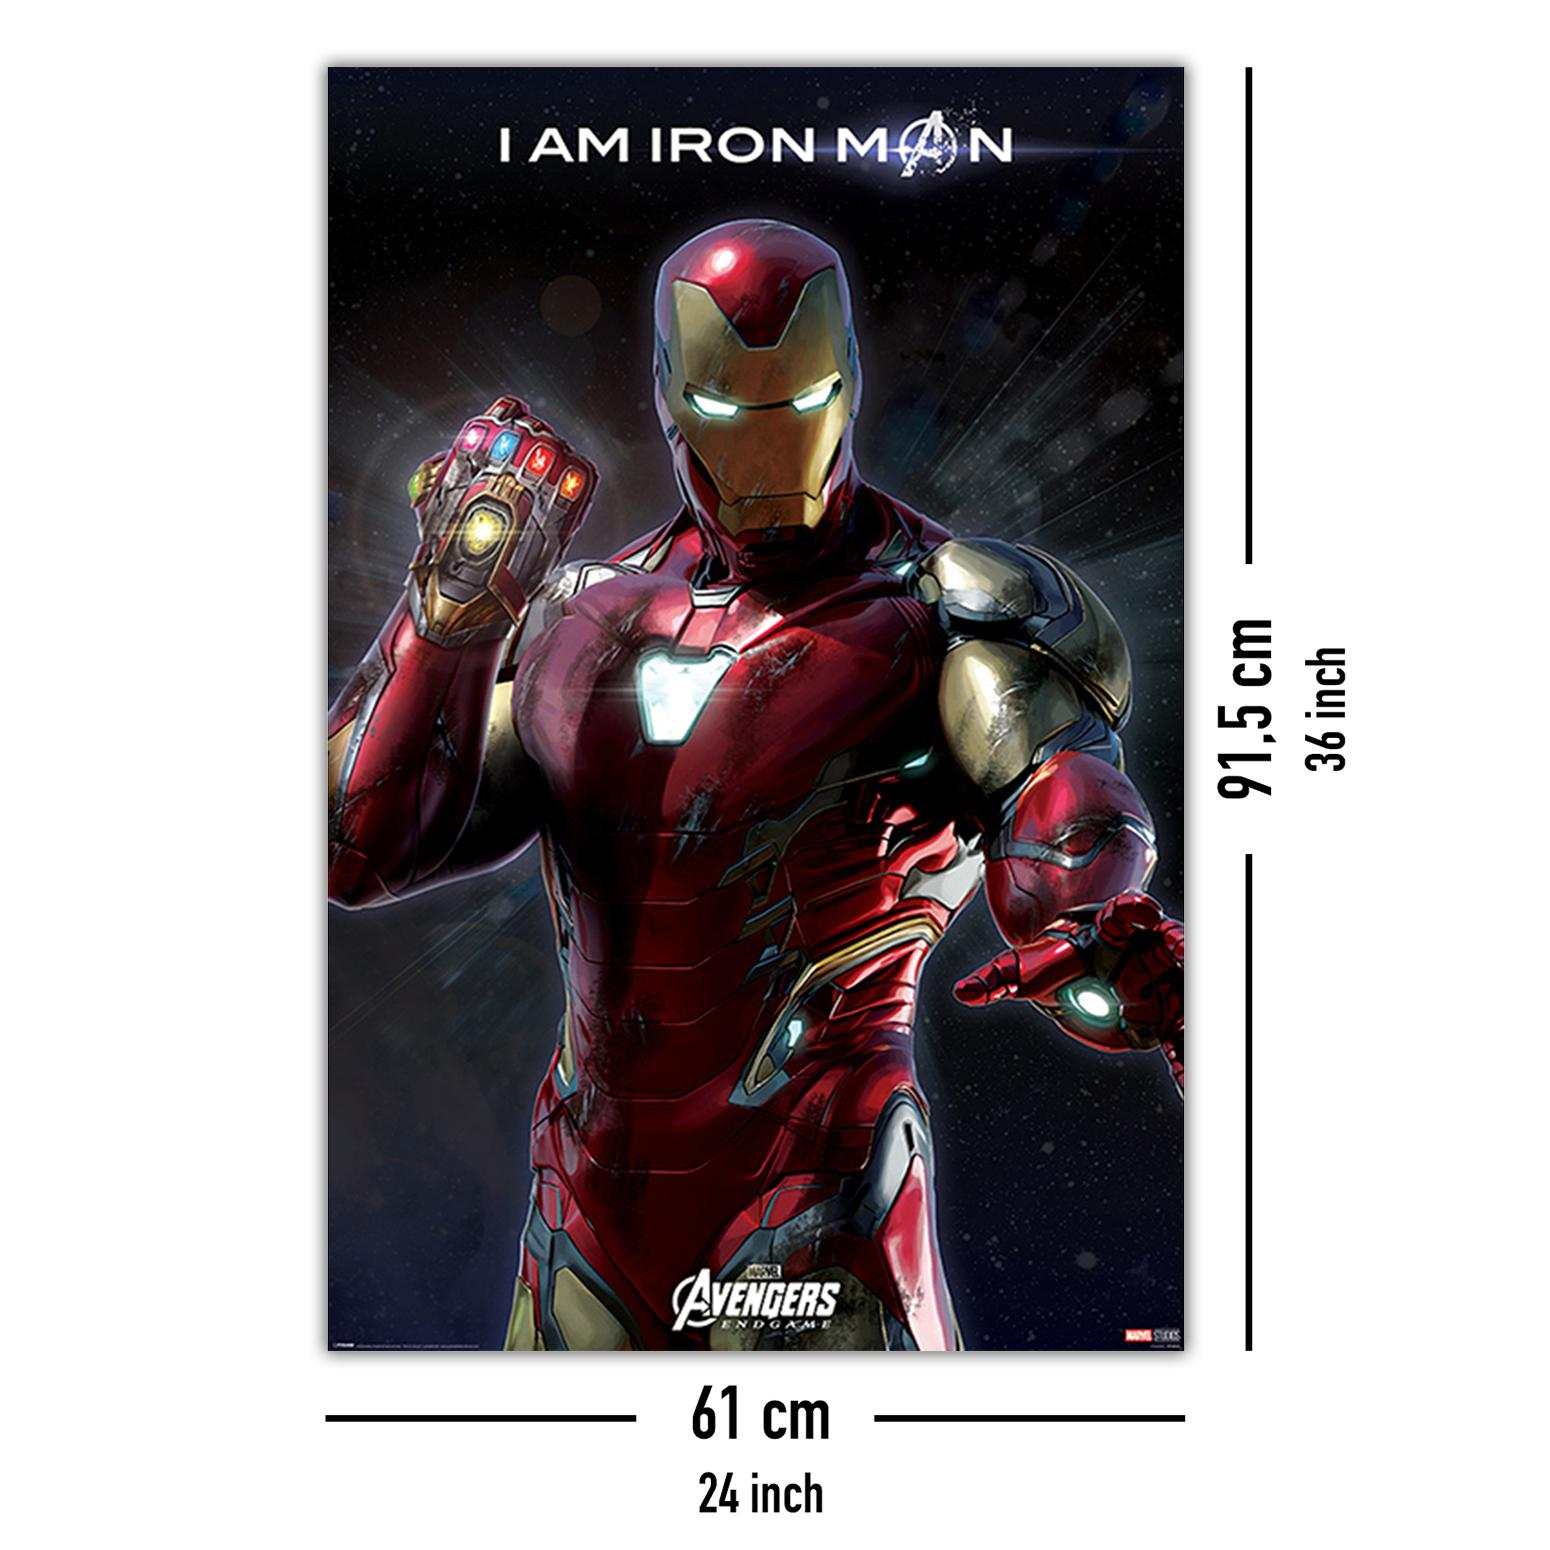 I INTERNATIONAL Man Avengers: Endgame Iron Am Poster Poster Großformatige PYRAMID